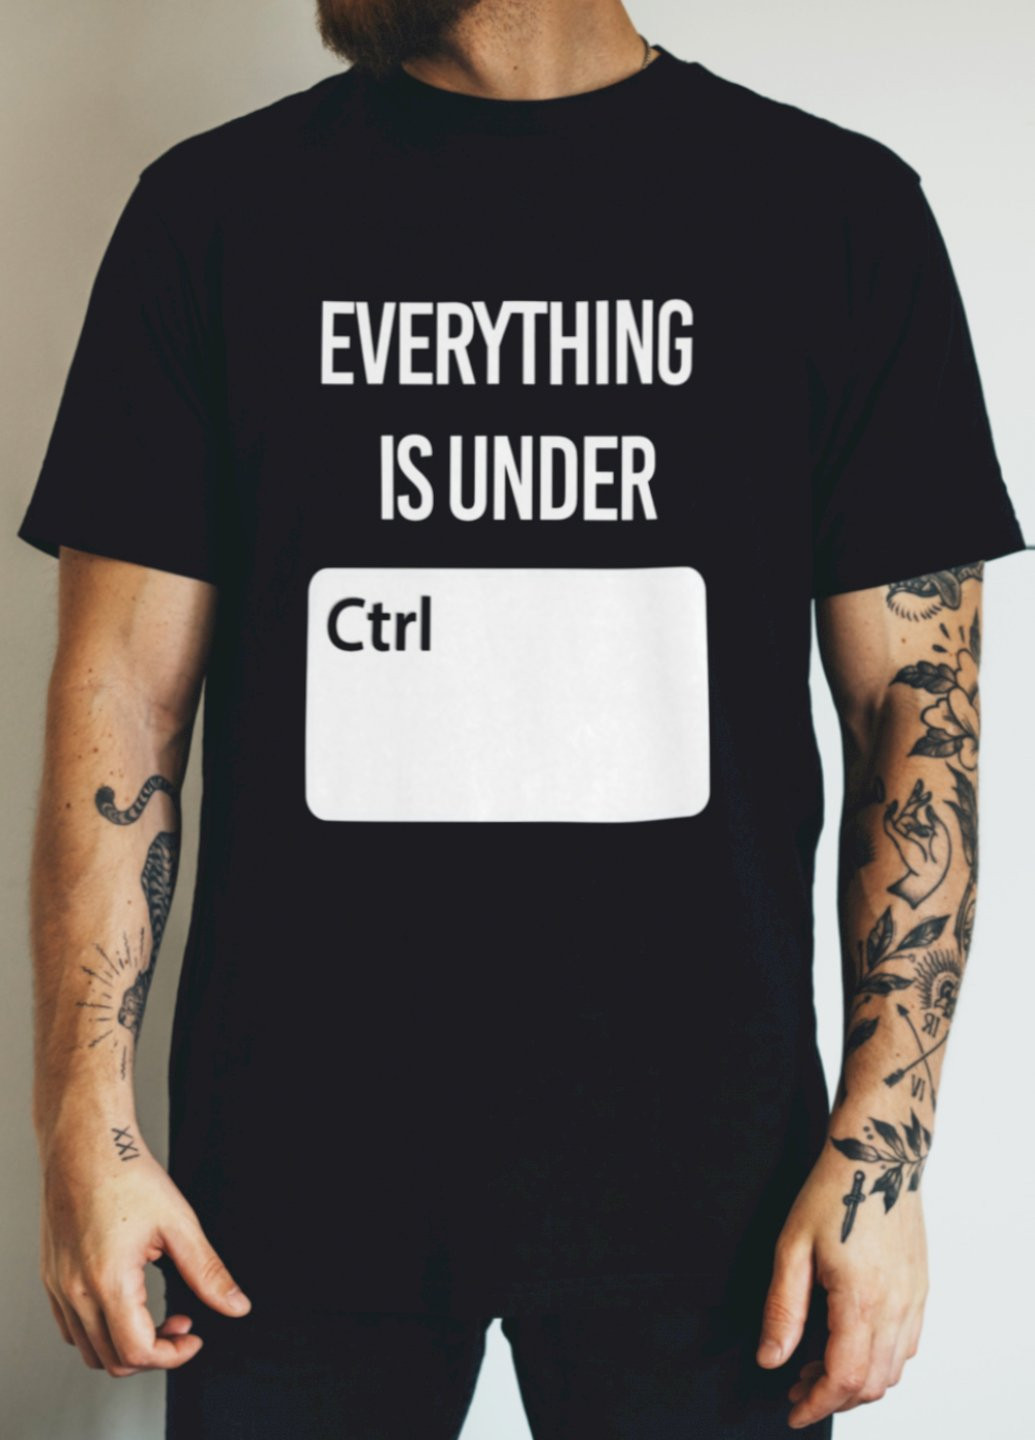 Черная футболка "everything is under cntrl" Ctrl+